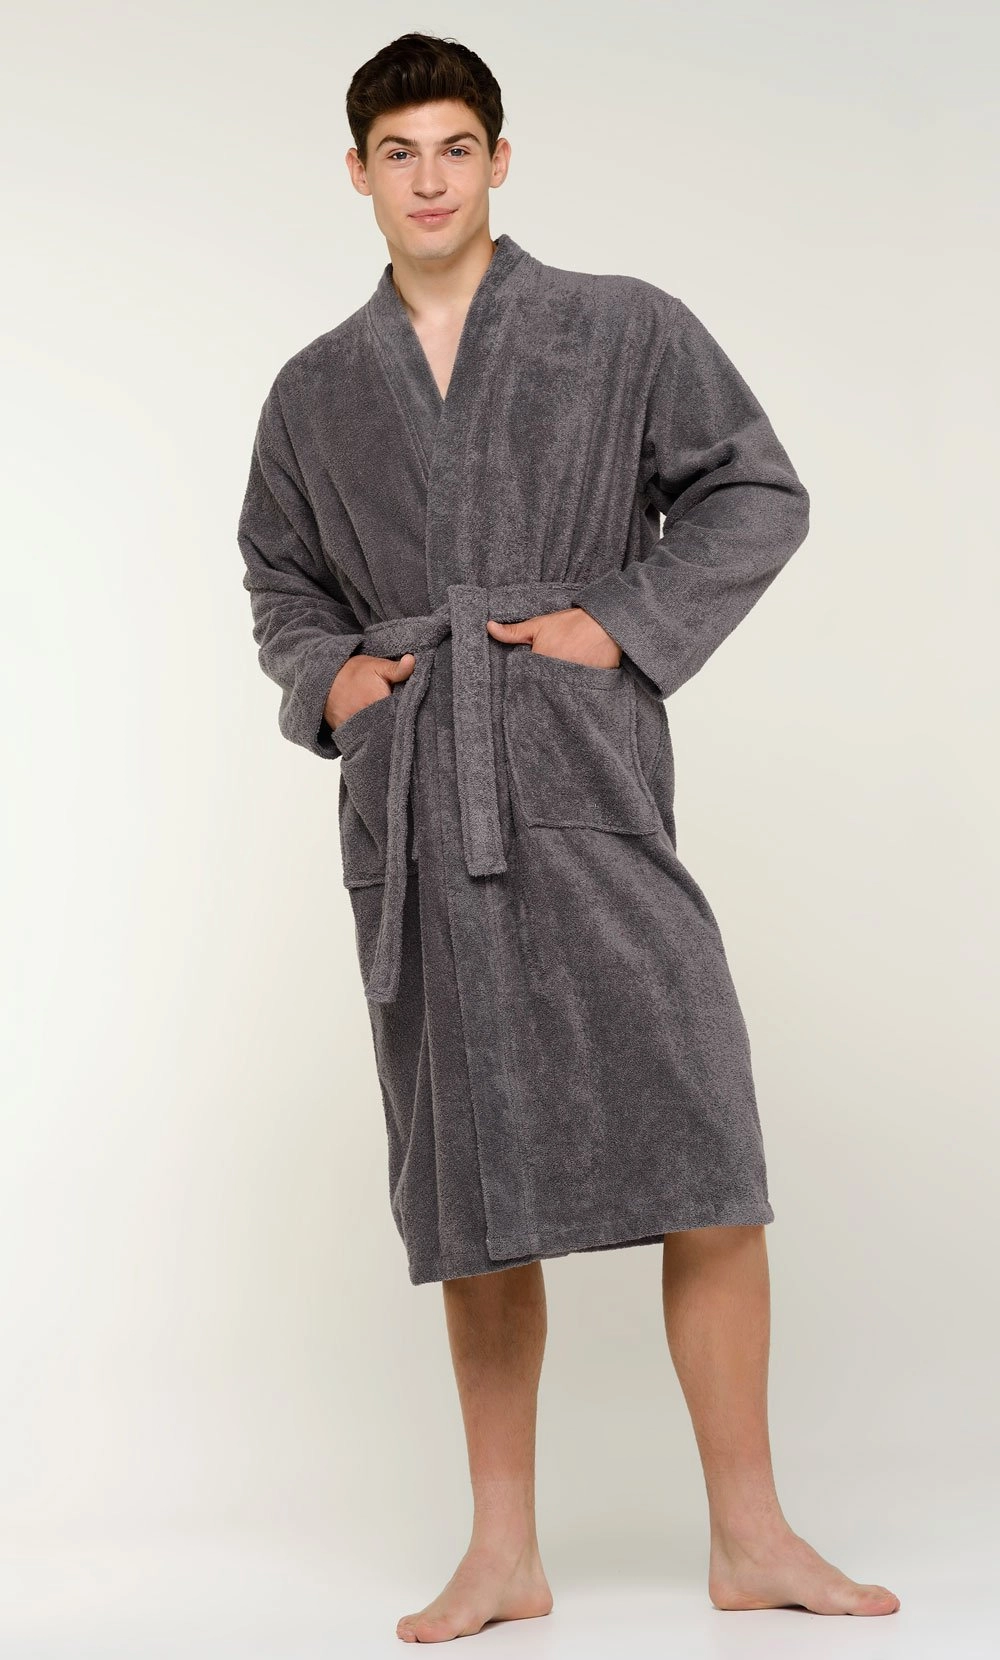 Mens Silk Bath Robe Extra Long  Thick Men's Winter Bathrobes